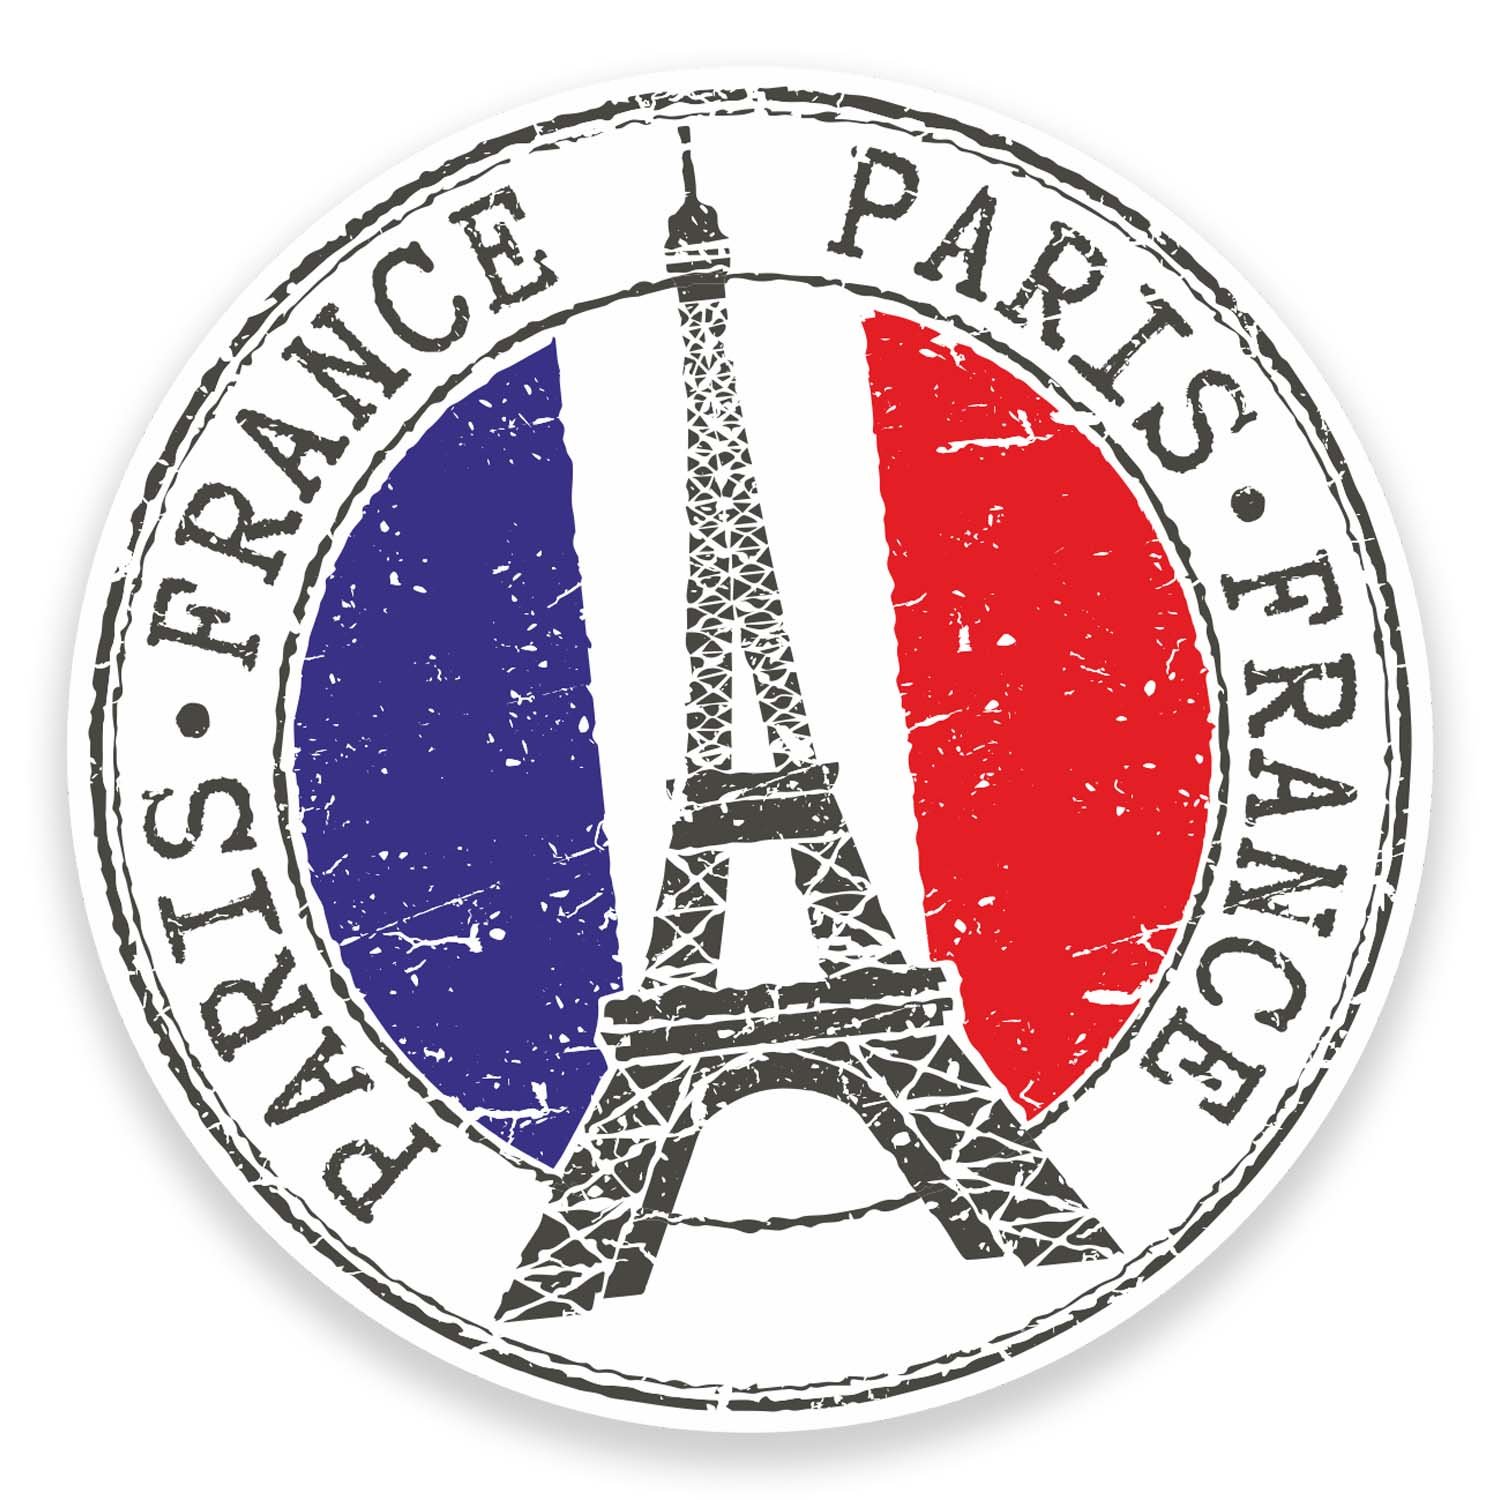 2 x Aufkleber, Motiv: Paris, Eiffelturm, Frankreich, Aufkleber, Auto-/Laptop-Aufkleber, Gepäckaufkleber # 9271, 10 x 10 cm (B x H) von DestinationVinyl